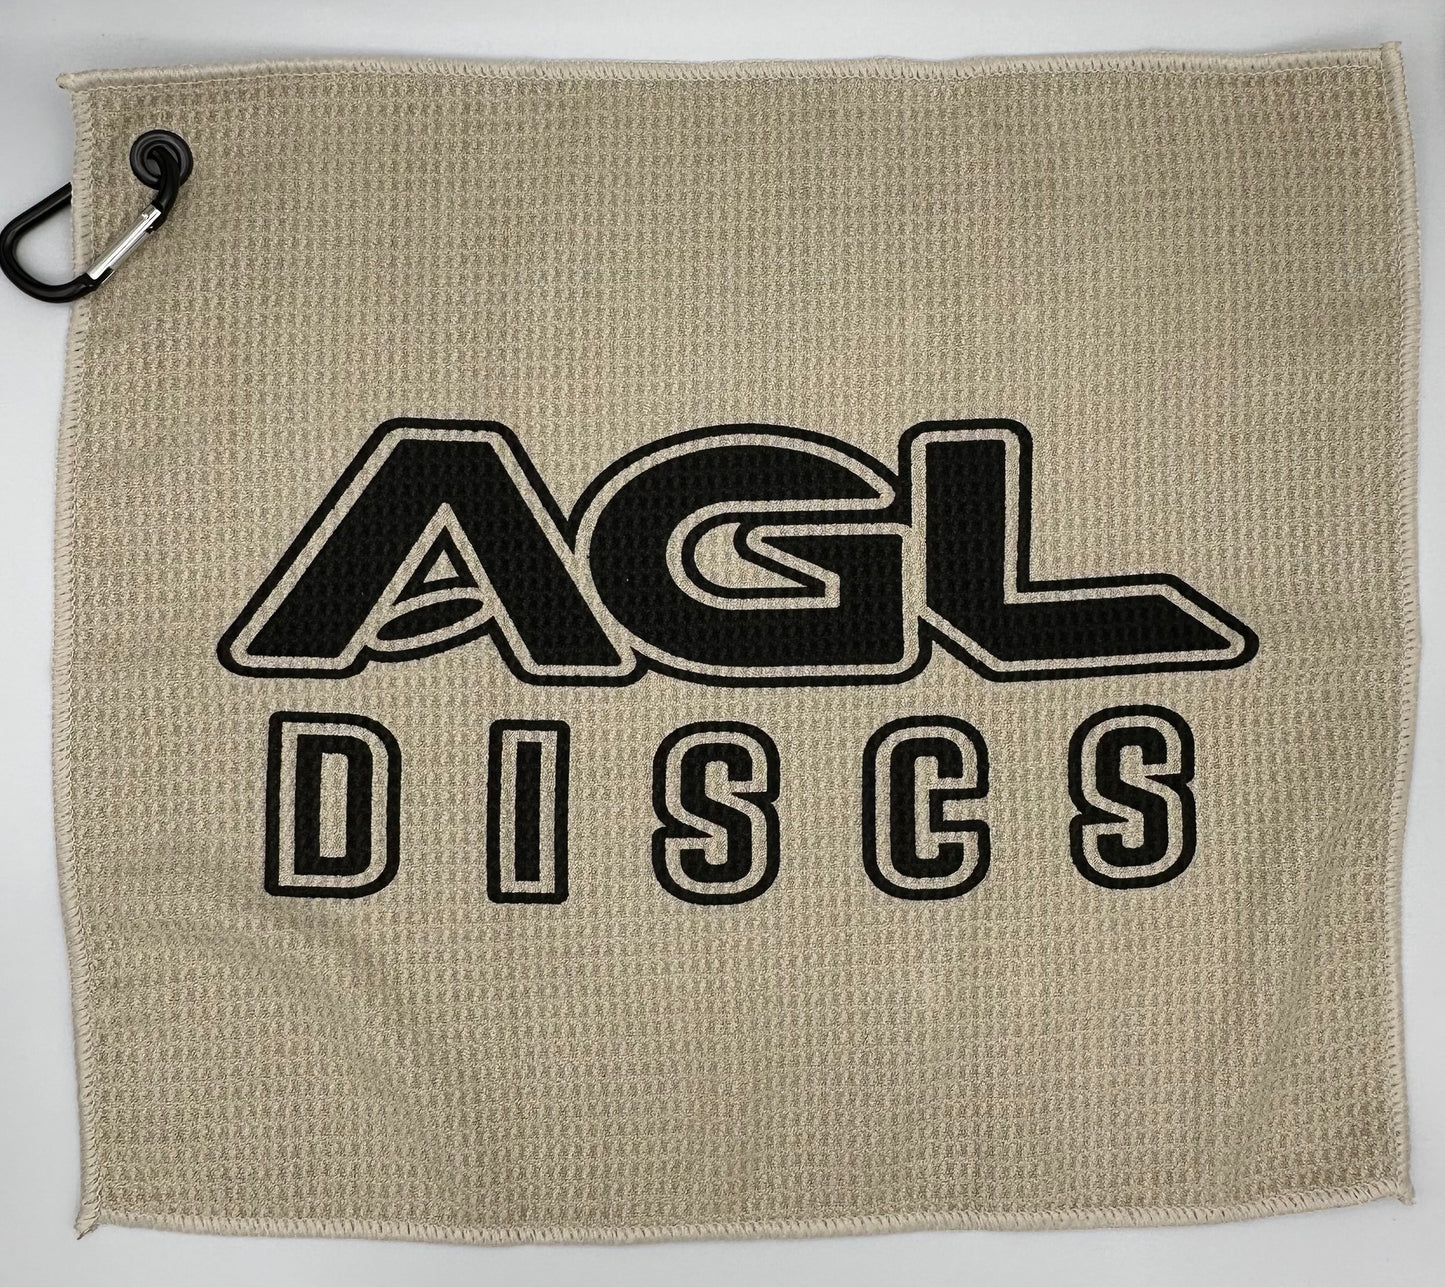 AGL Discs - AGL Towel (Assorted Styles)